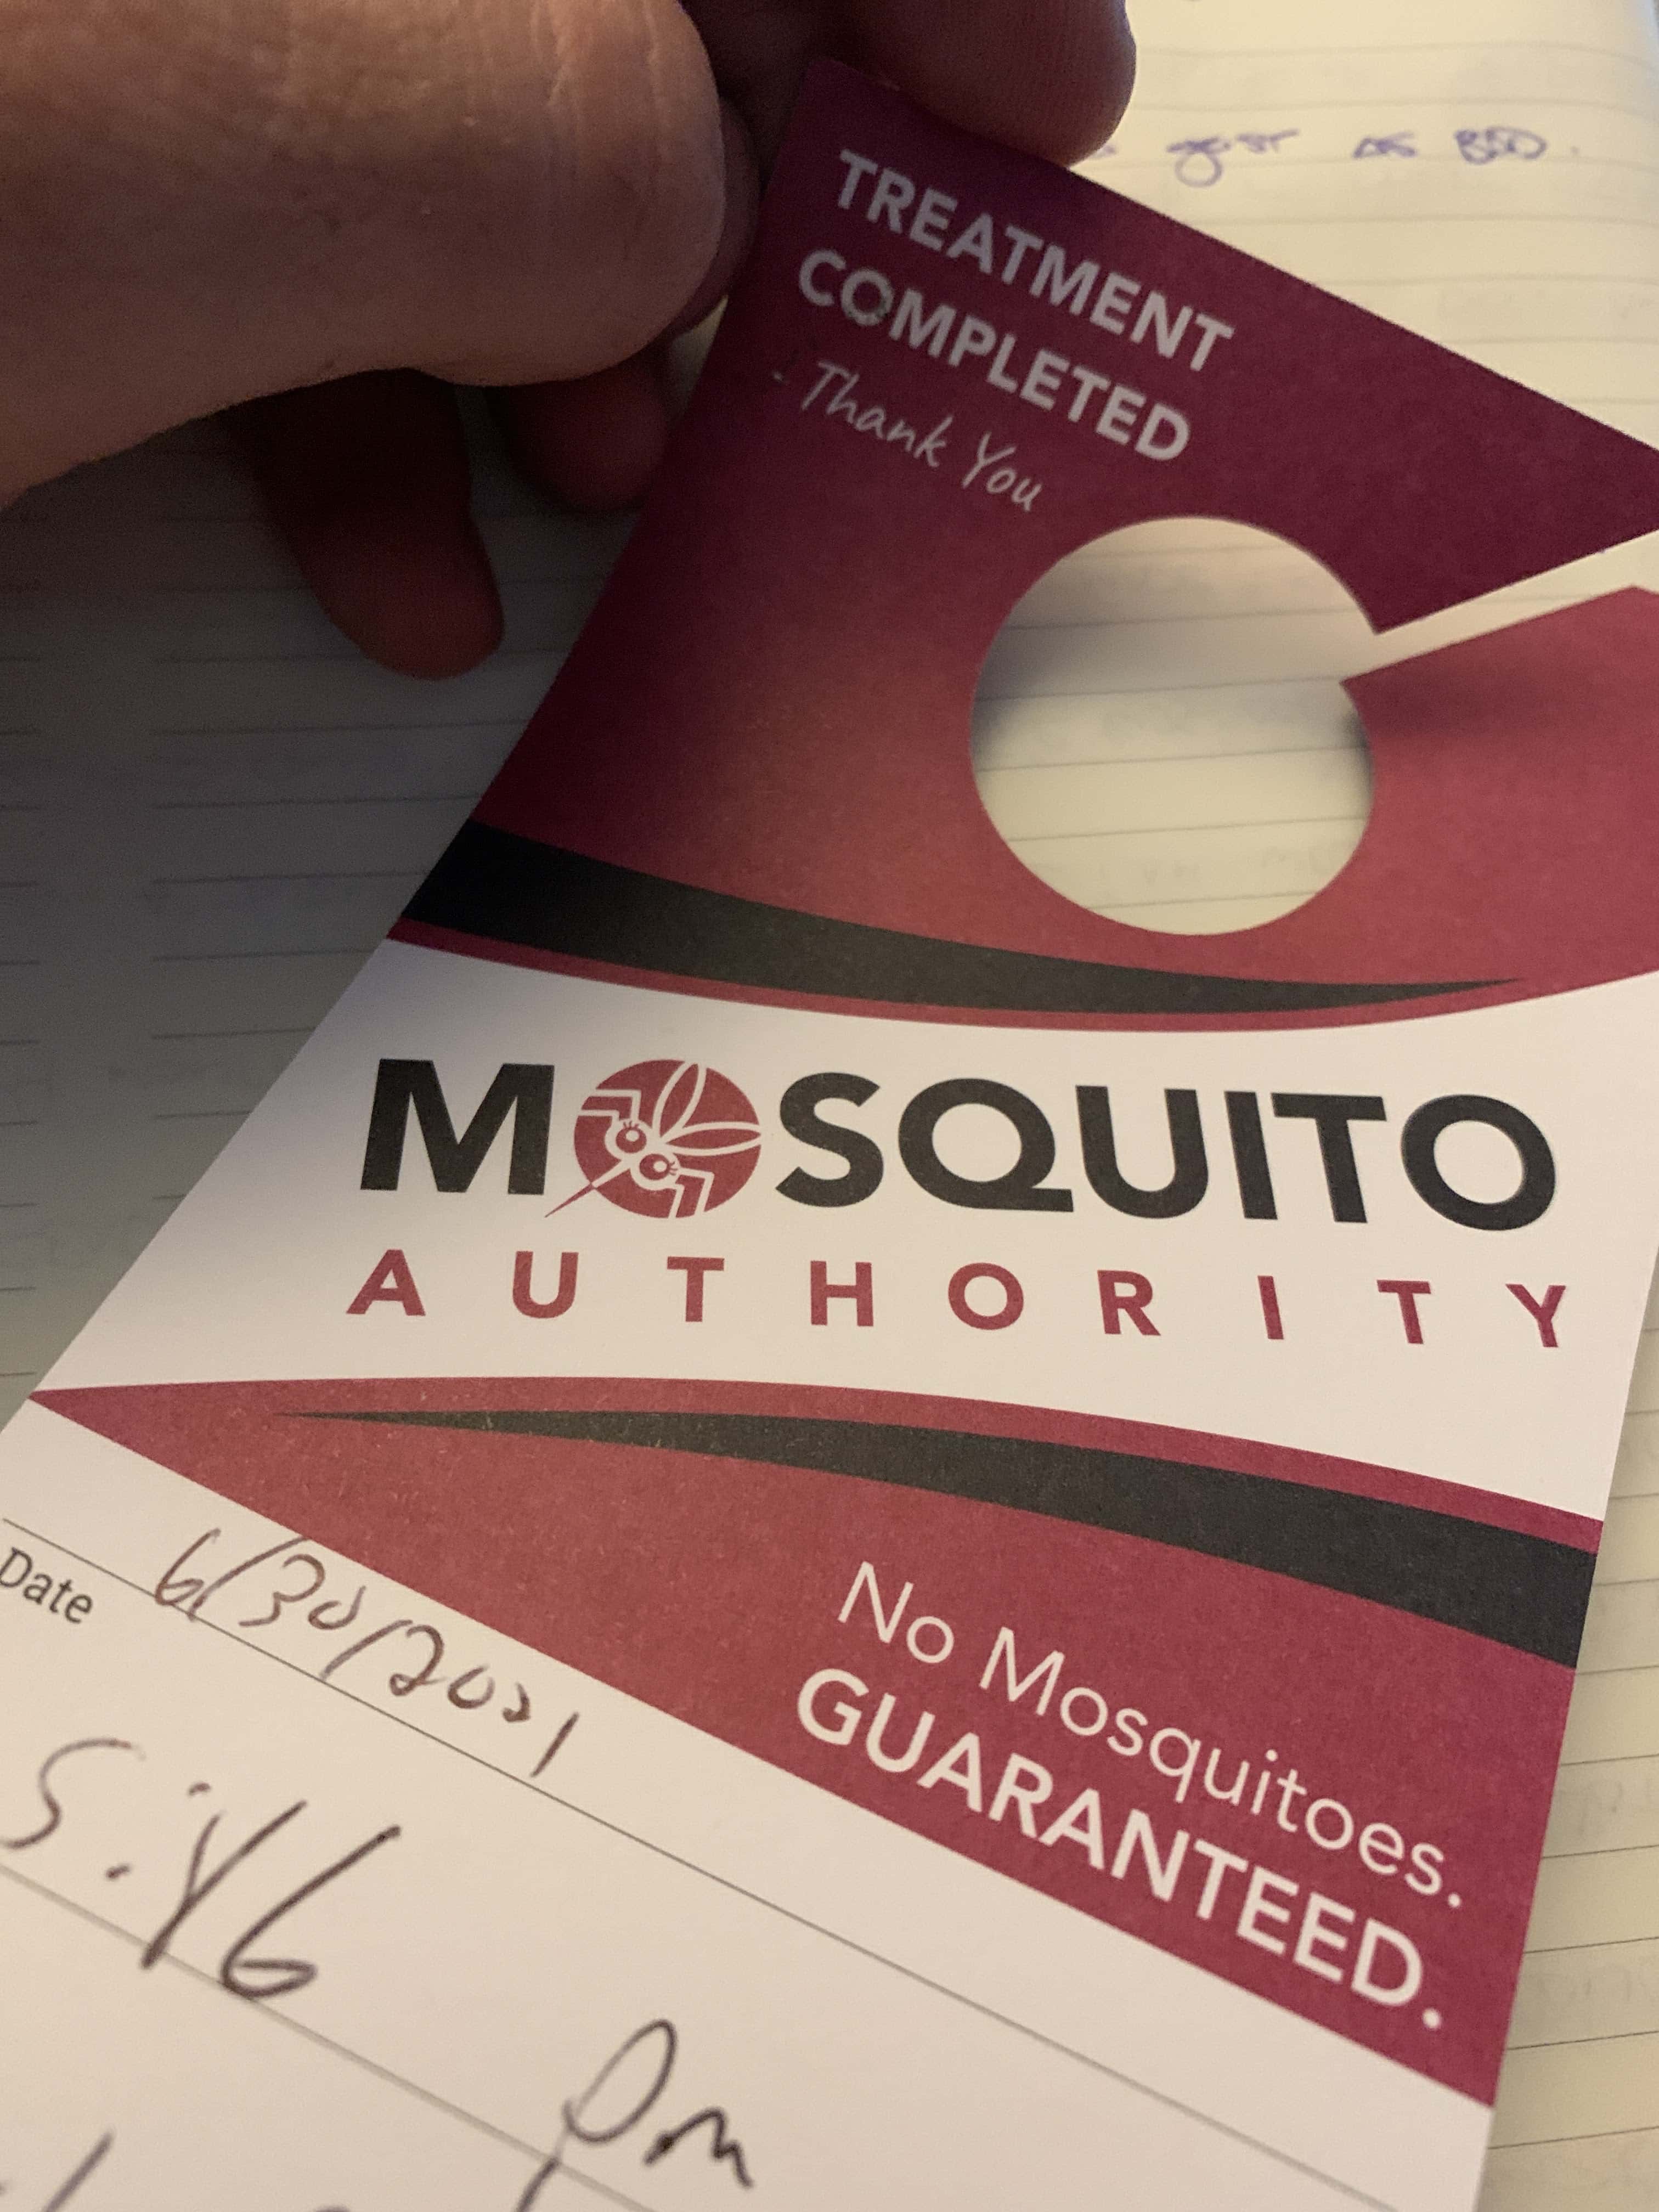 Mosquito Authority - Macomb, MI - Shelby Township, MI, US, macomb mosquito control